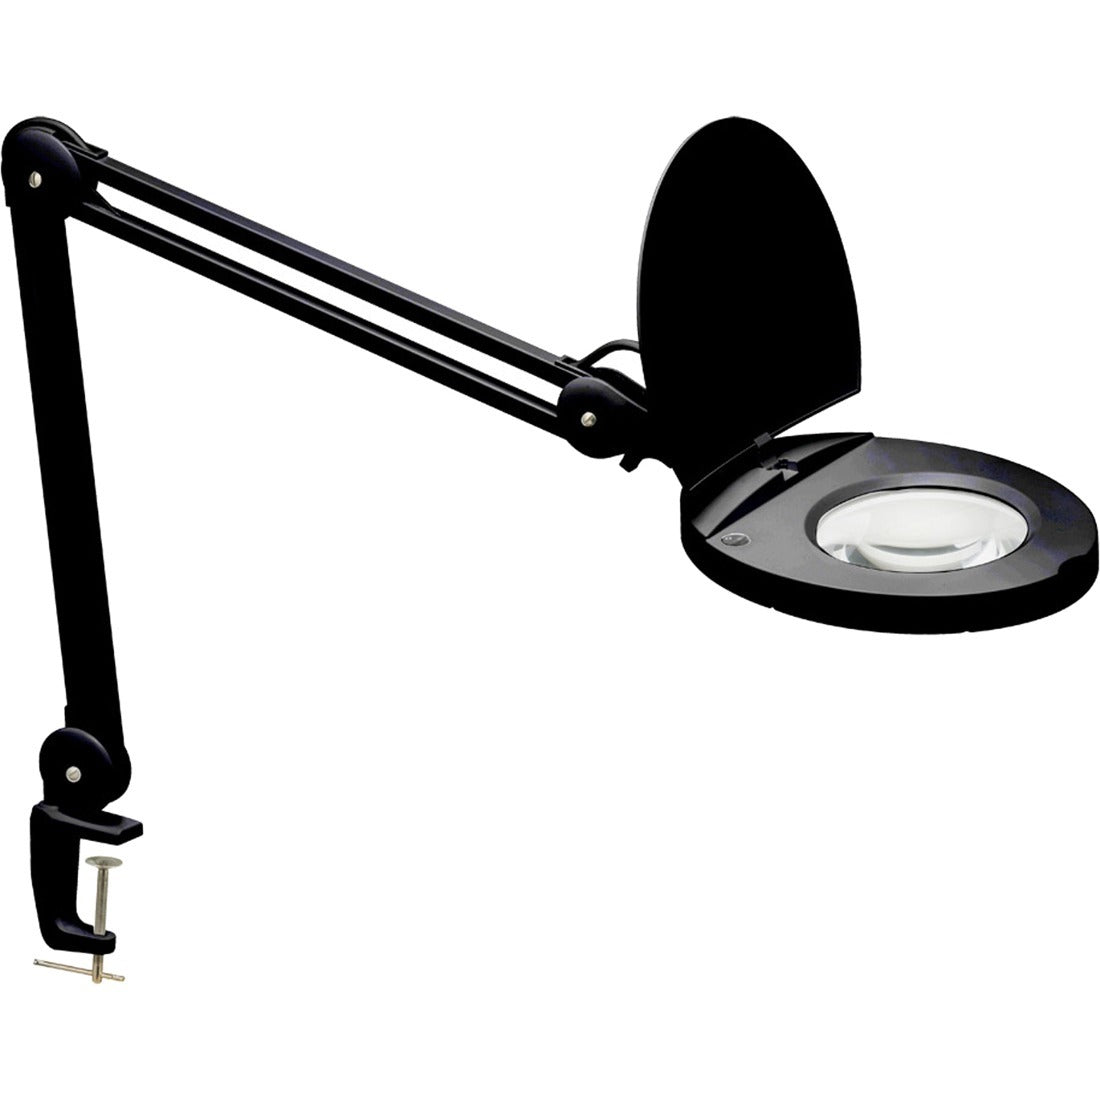 Dainolite 8W LED Magnifier Lamp, Black Finish